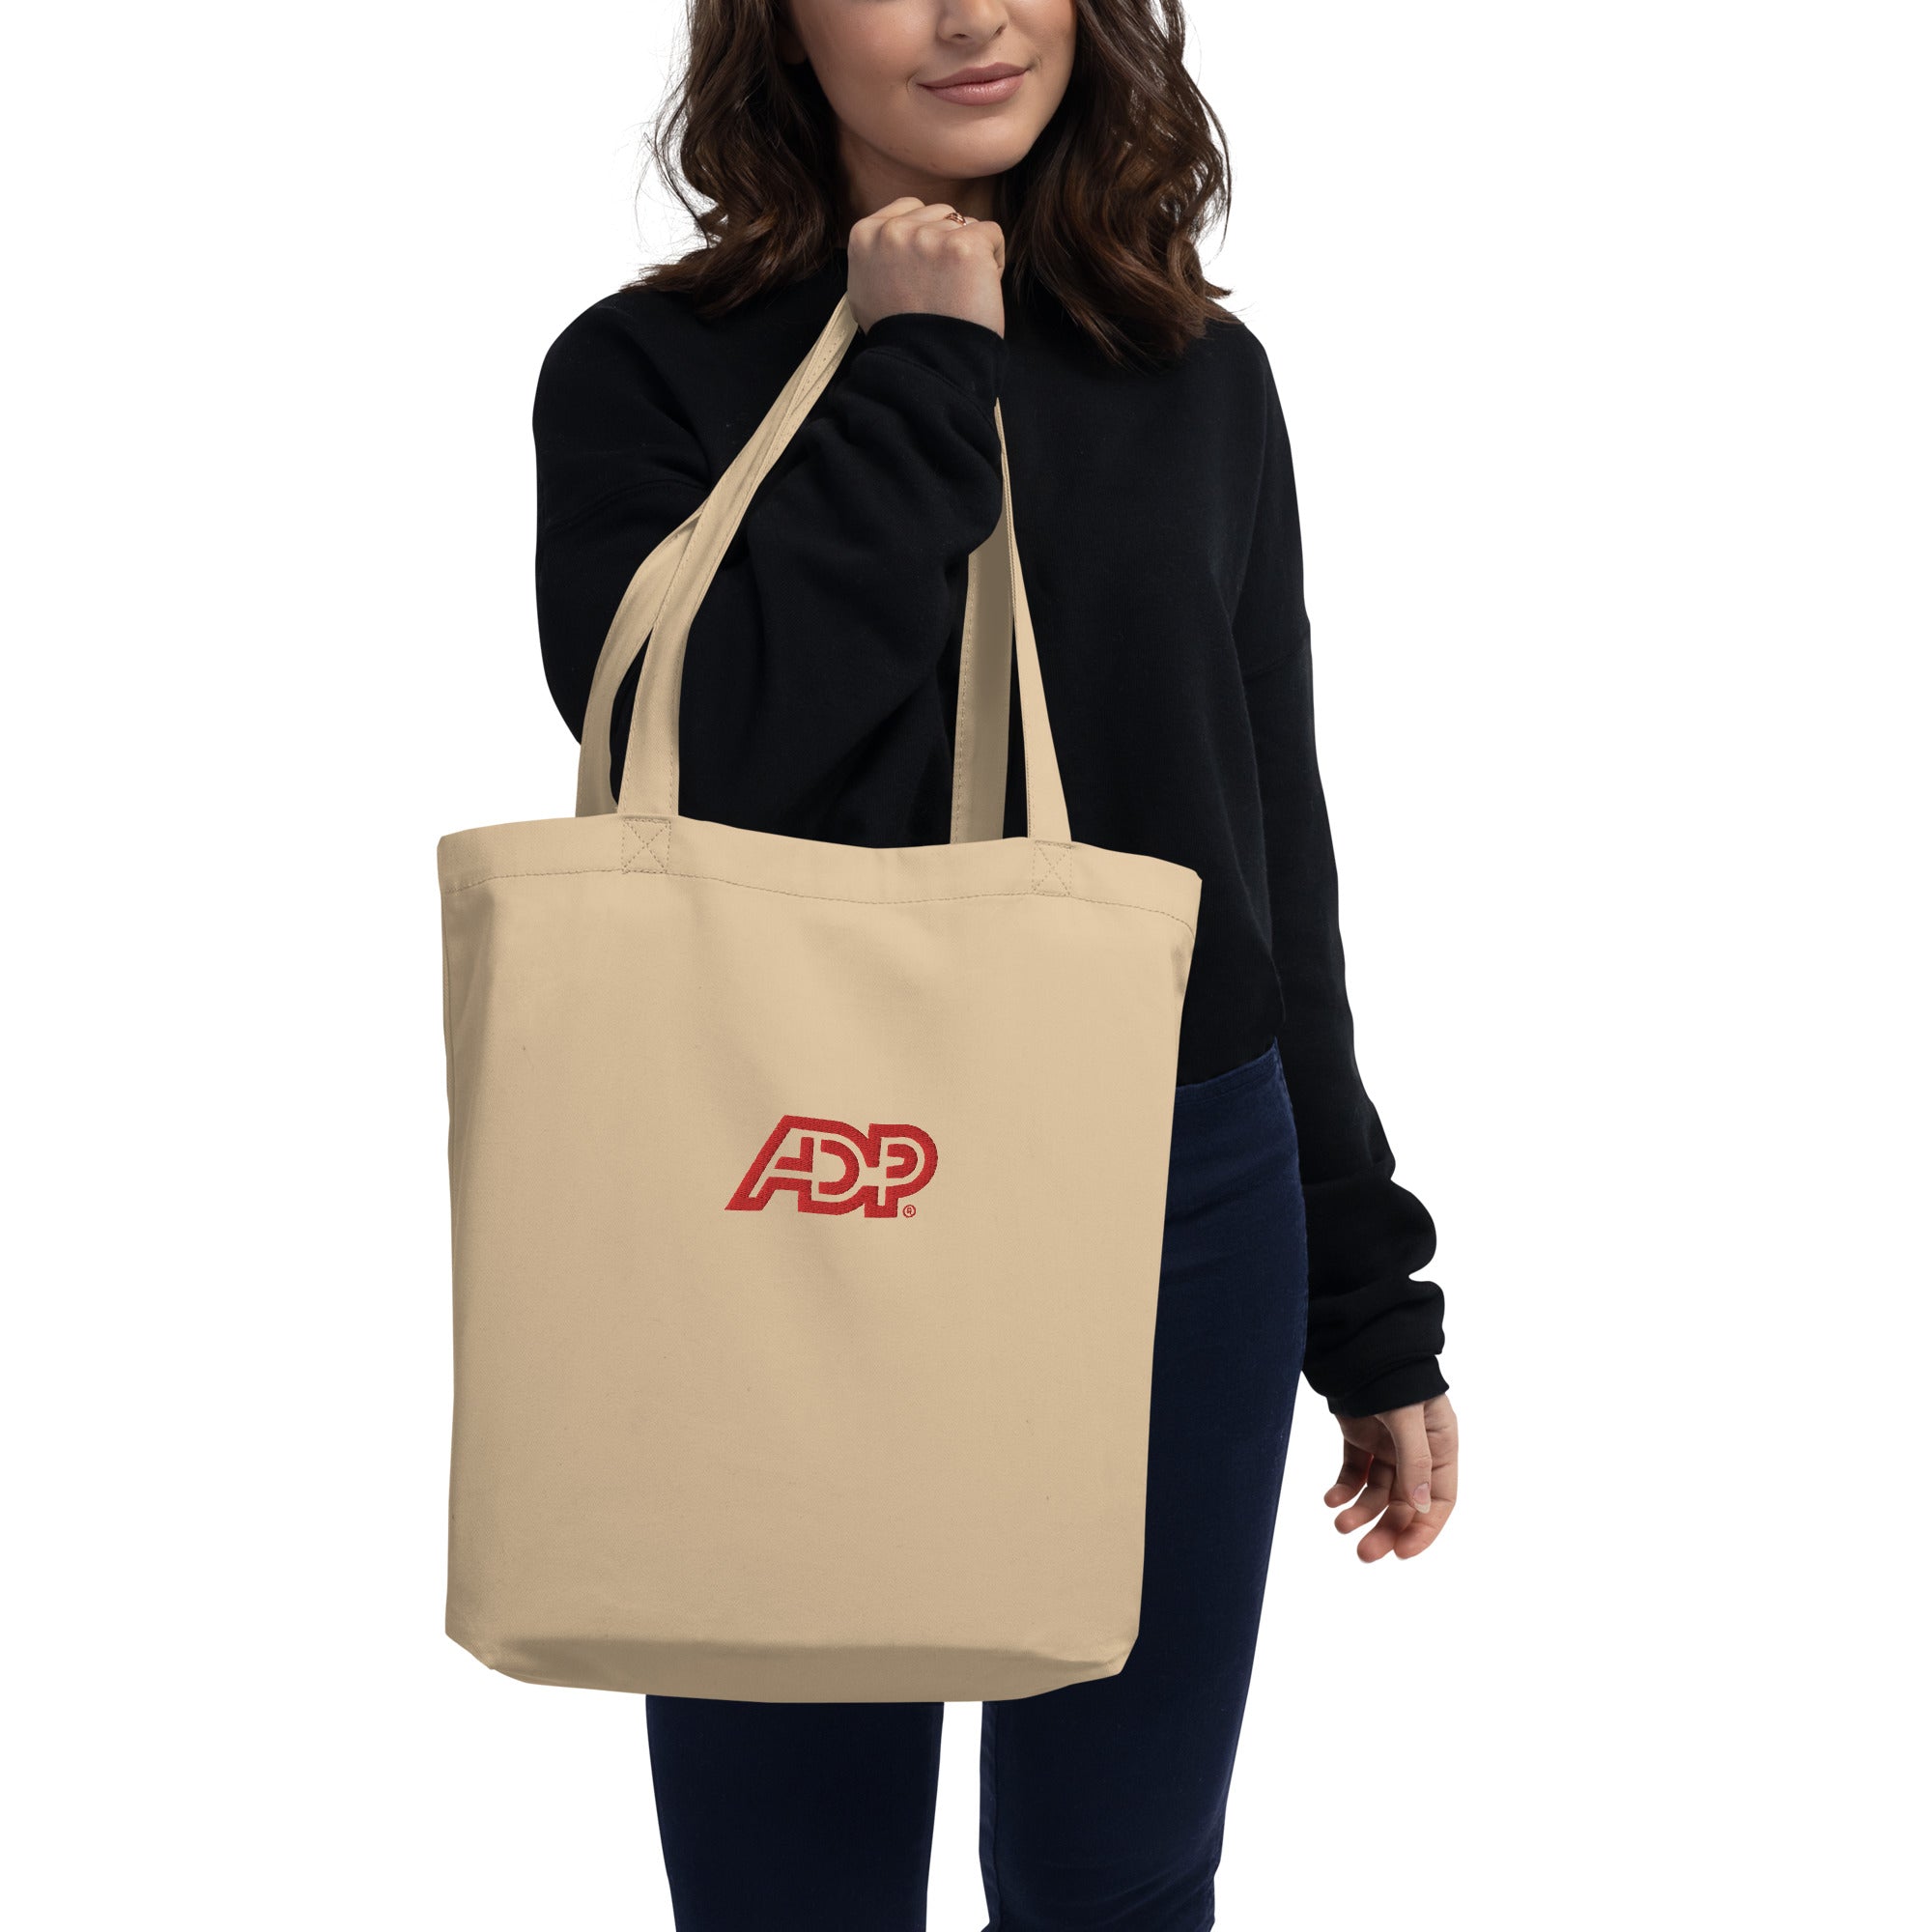 ADP Eco Tote Bag - Embroidery